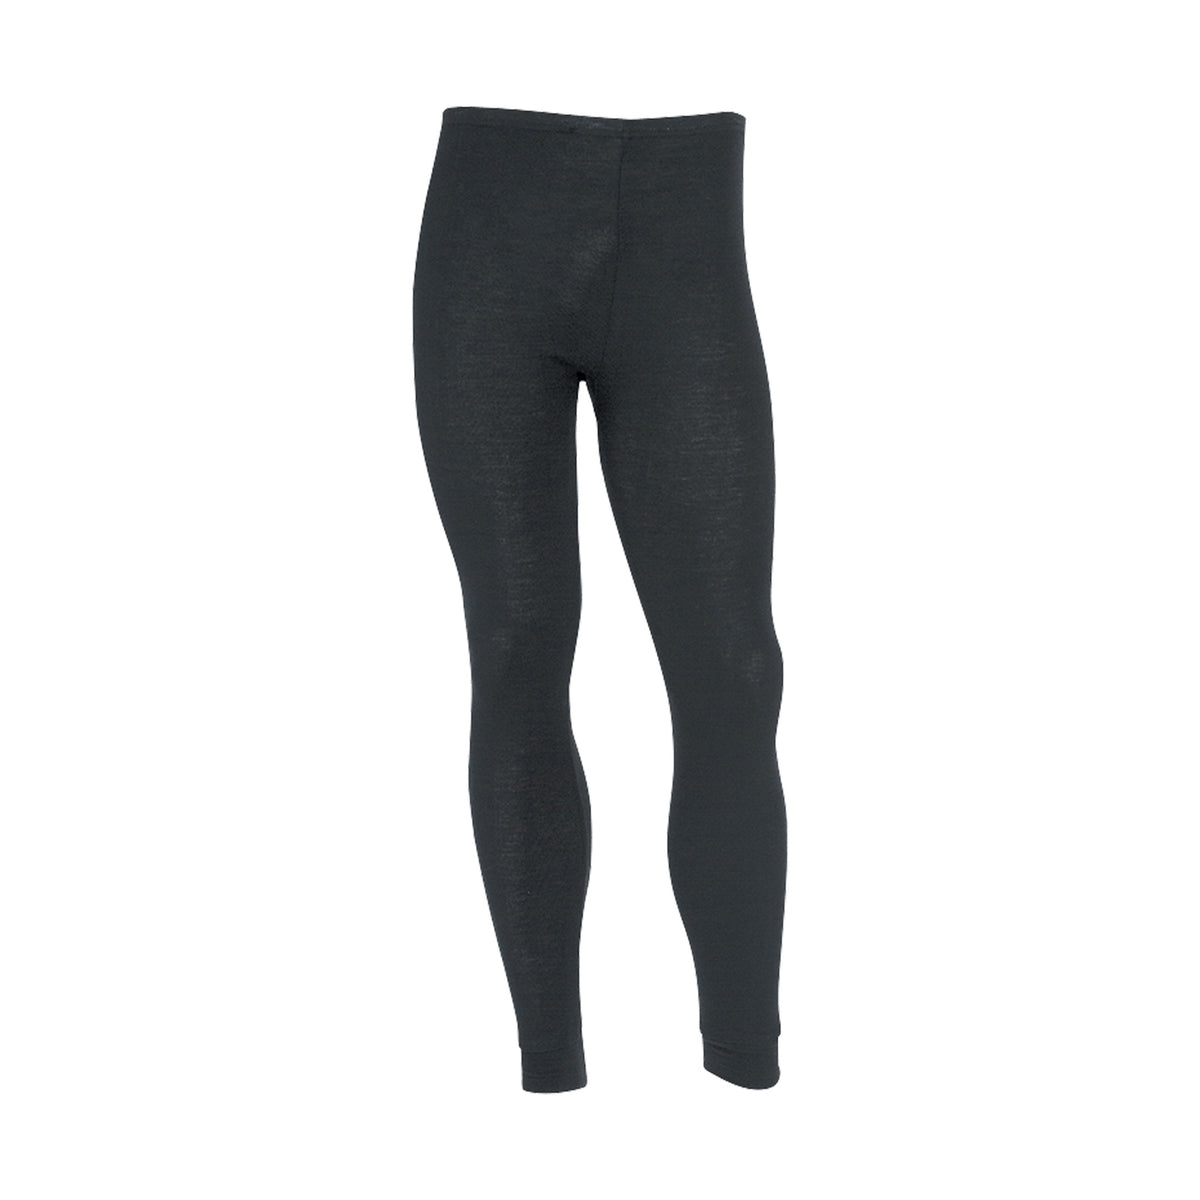 mens thermal polypropylene pants in black